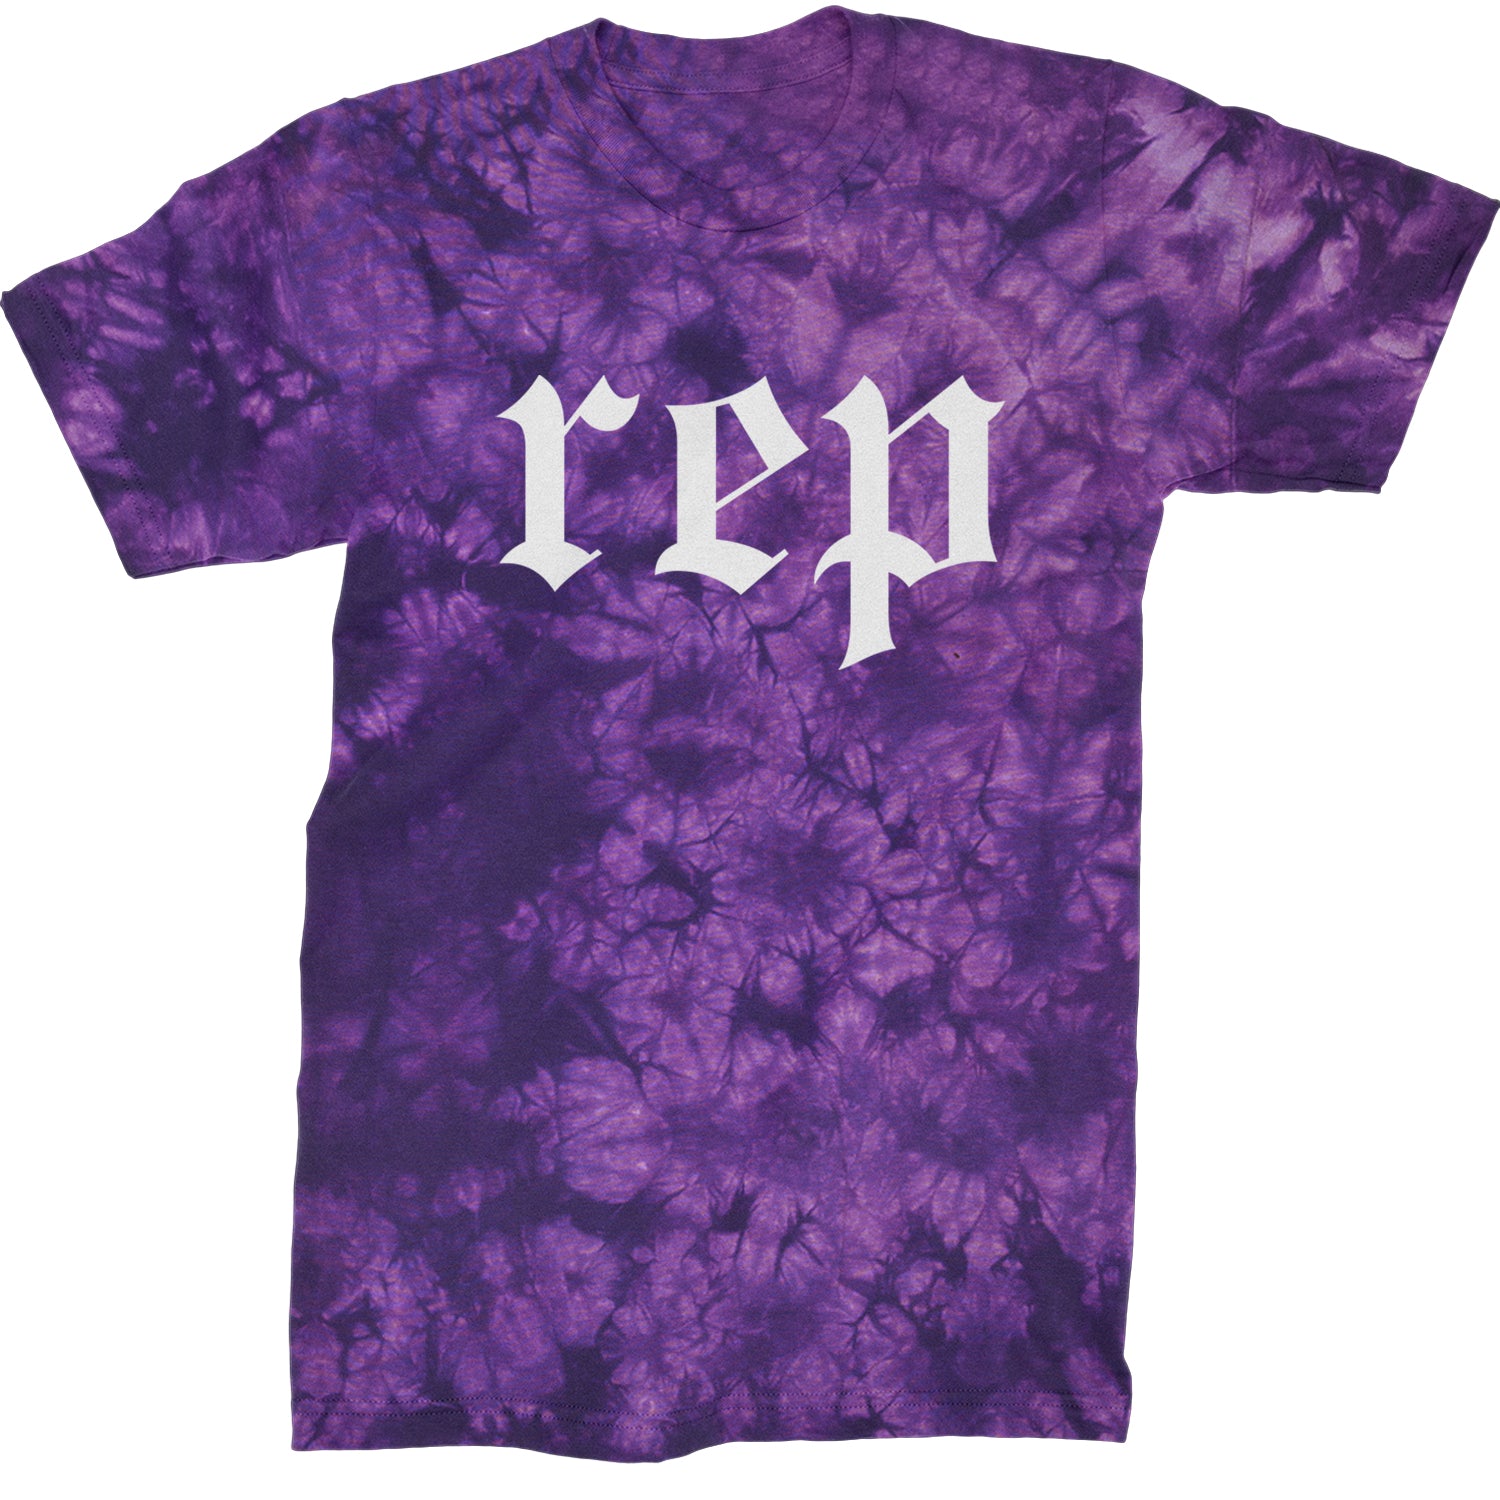 REP Reputation Eras Music Lover Gift Fan Favorite Mens T-shirt Tie-Dye Crystal Purple